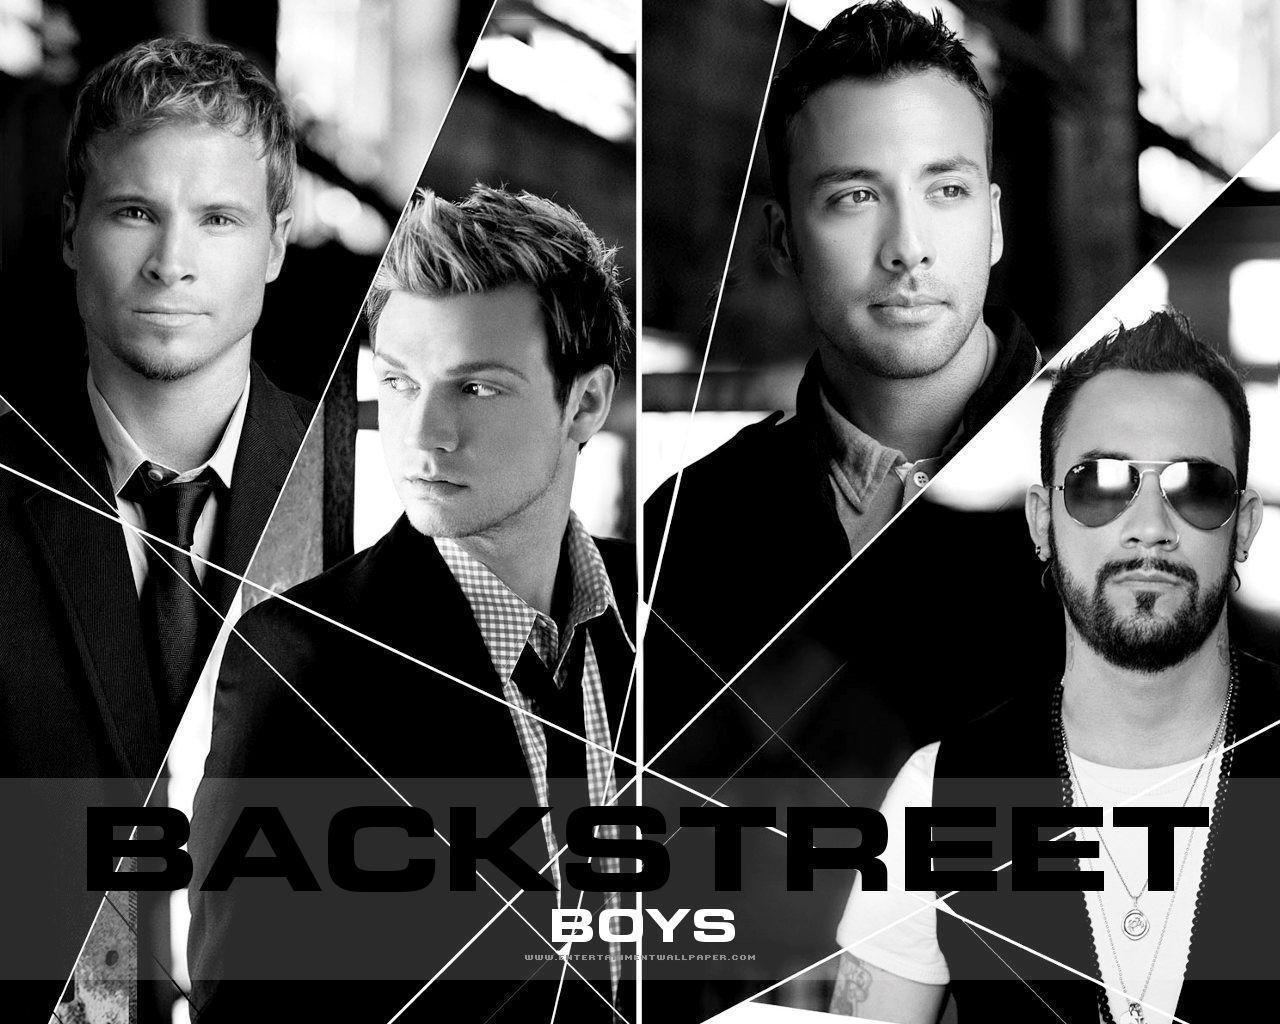 Boys got to go. Backstreet boys 1993. Backstreet boys Unbreakable album. Backstreet boys новый альбом 2023. Backstreet boys картинки альбомов.